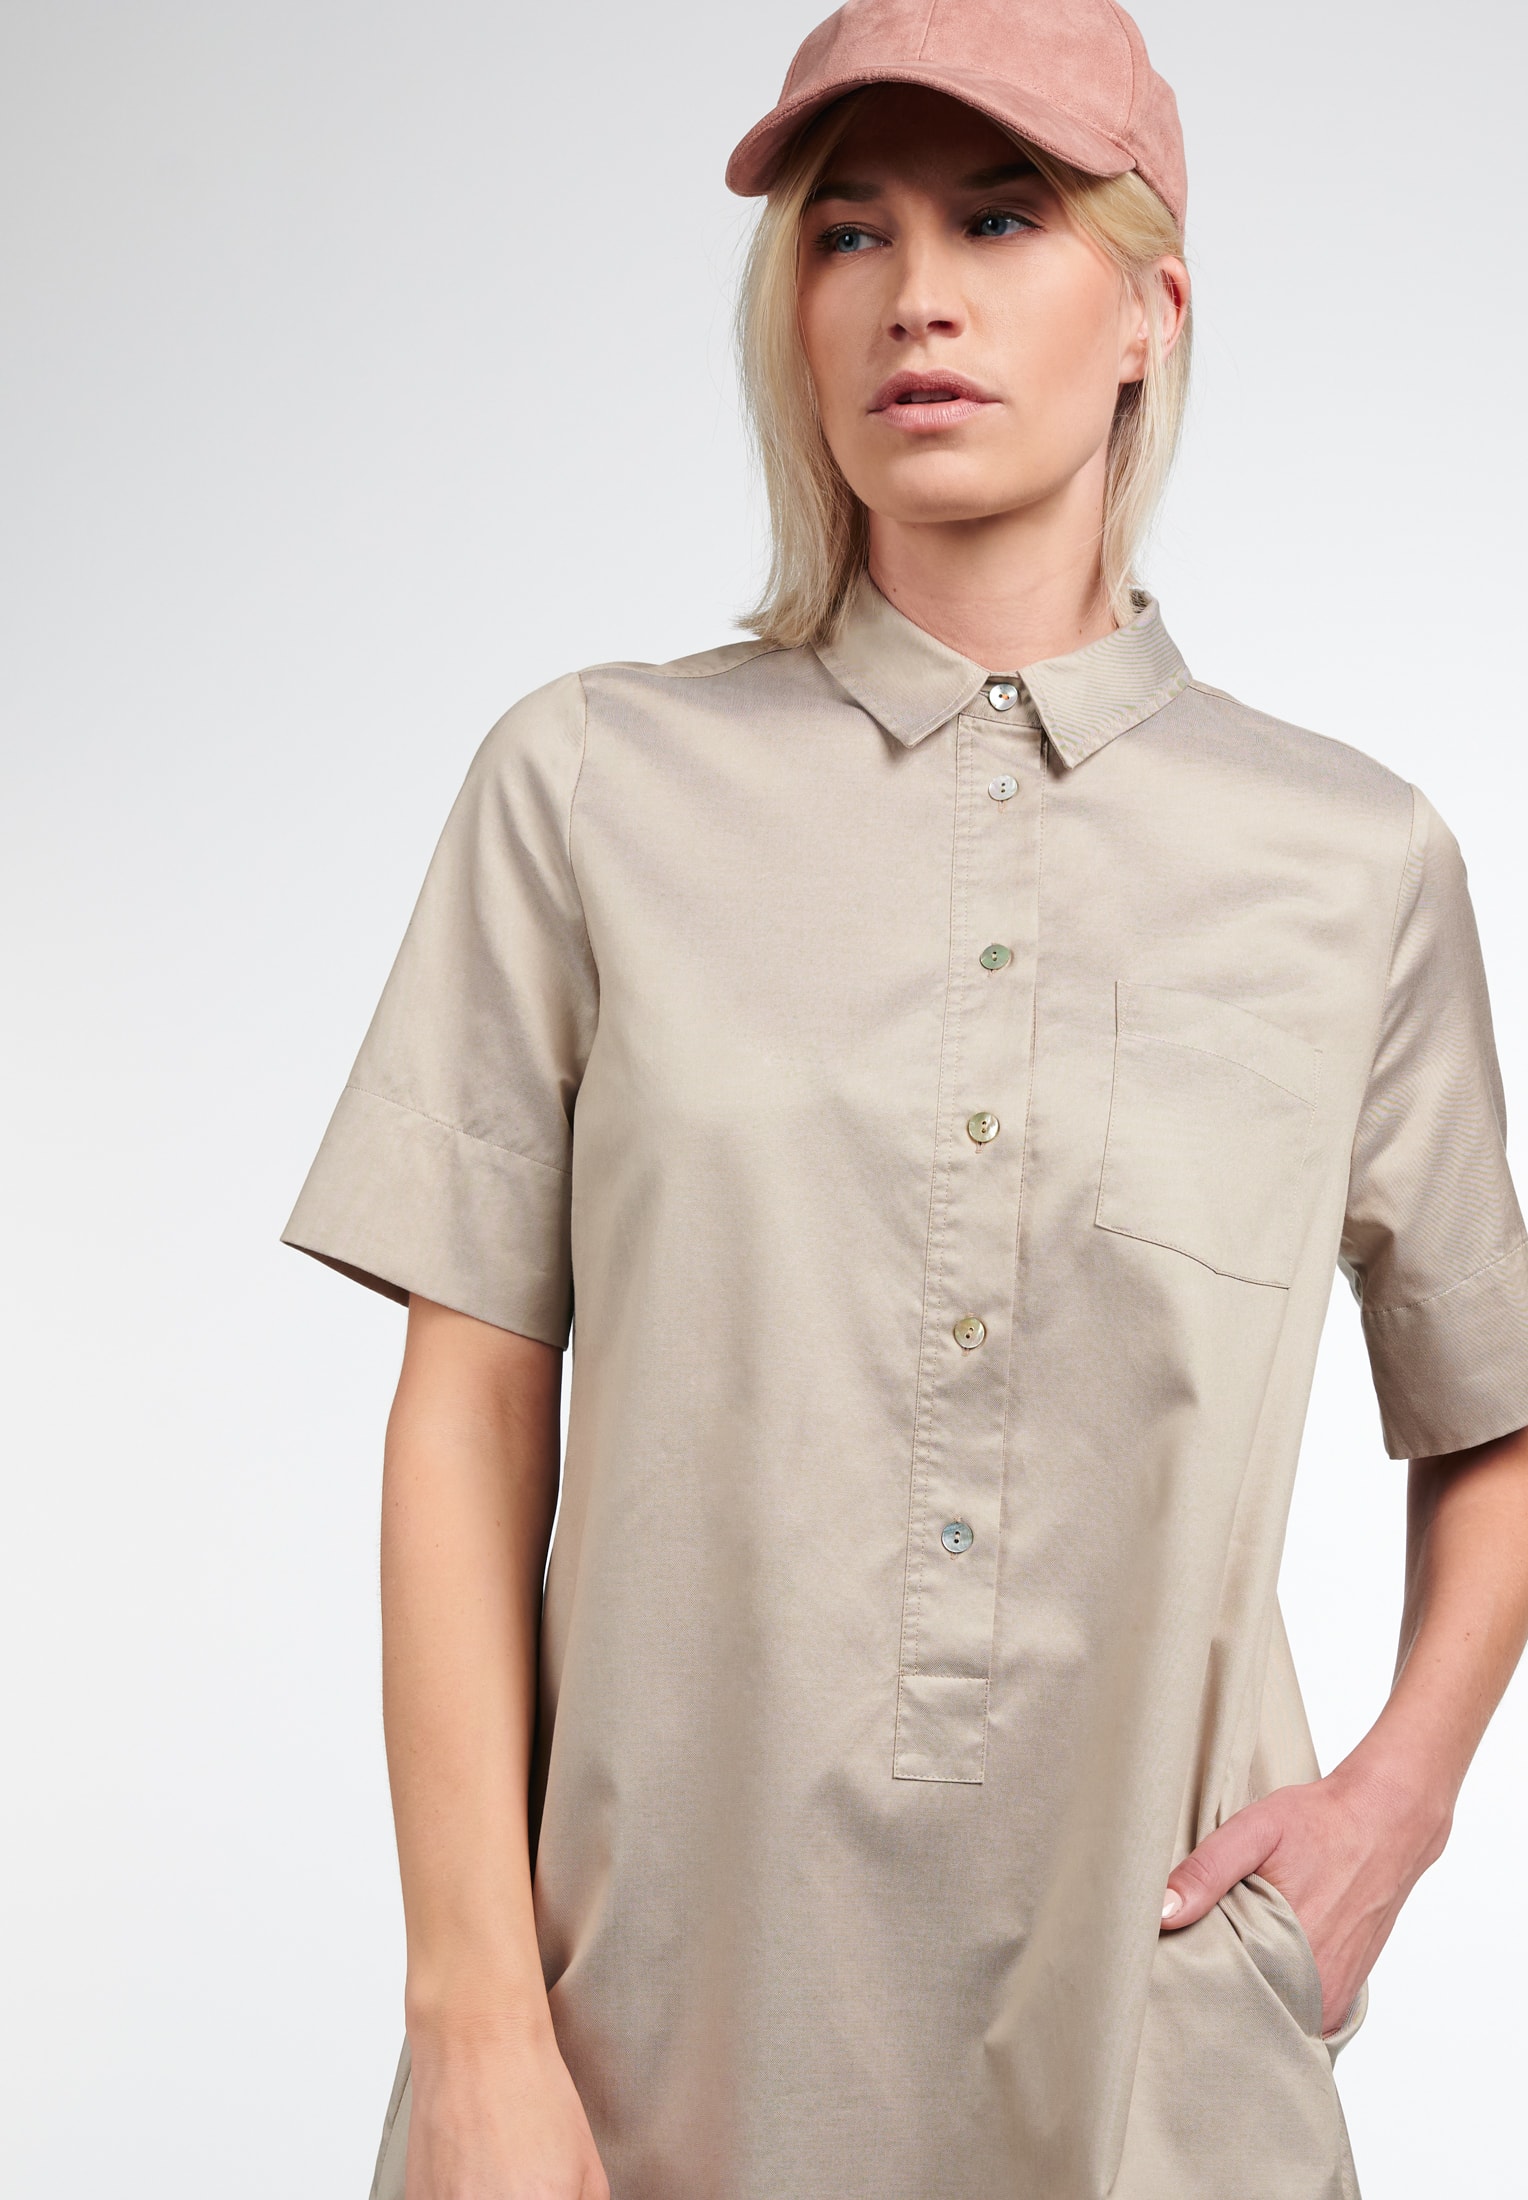 Soft Luxury Shirt Bluse in Kurzarm grün | | grün | unifarben 42 2DR00234-04-01-42-1/2 